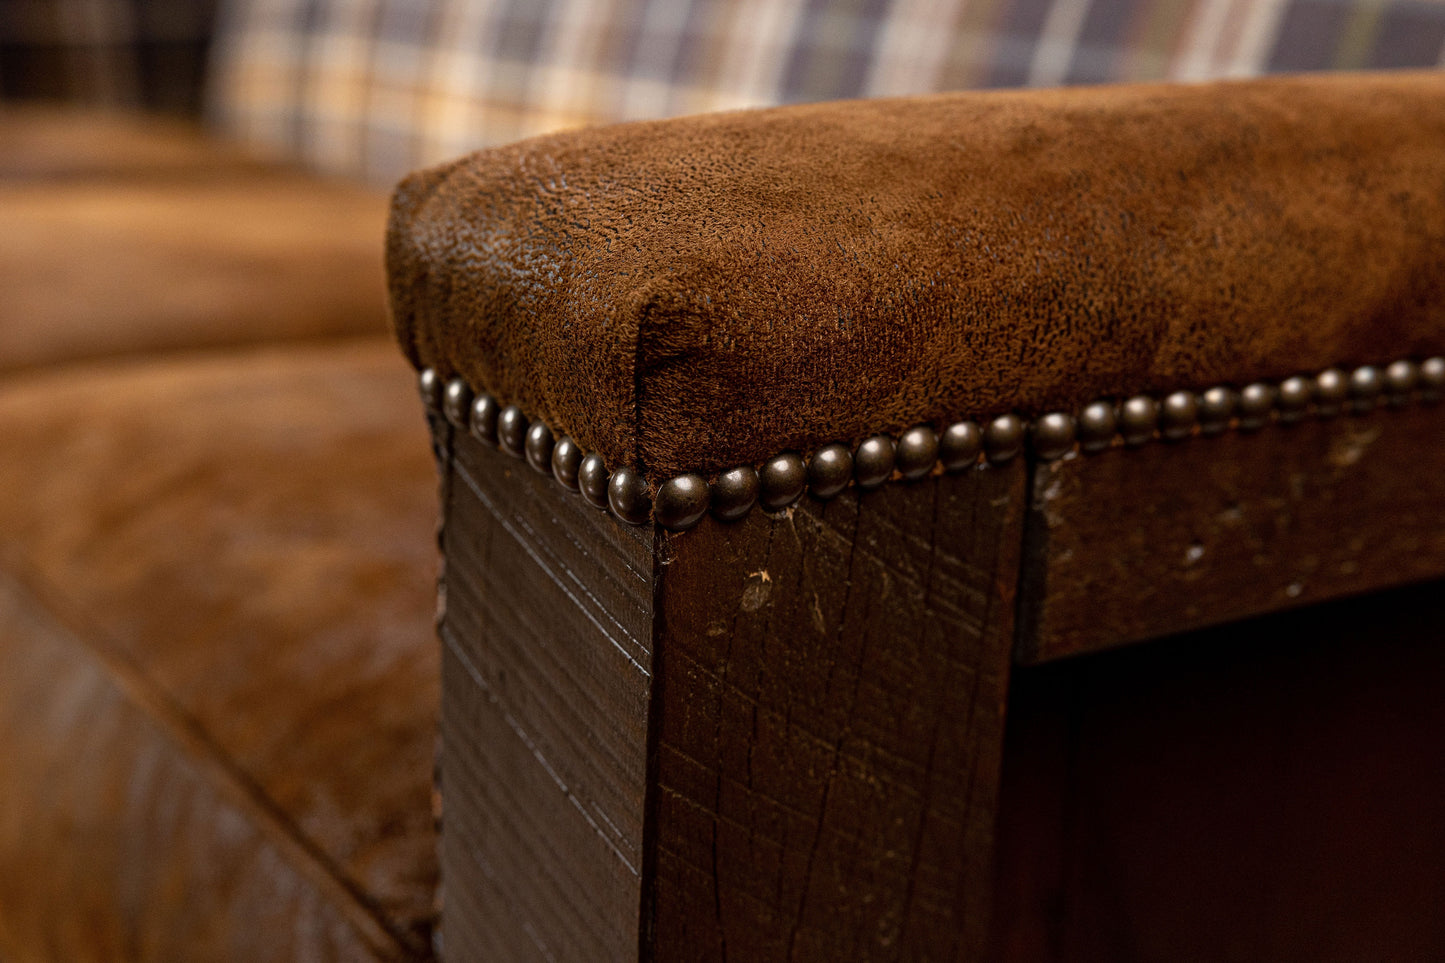 Old Hickory Urban Timber Sofa with Durango Bourbon Seat